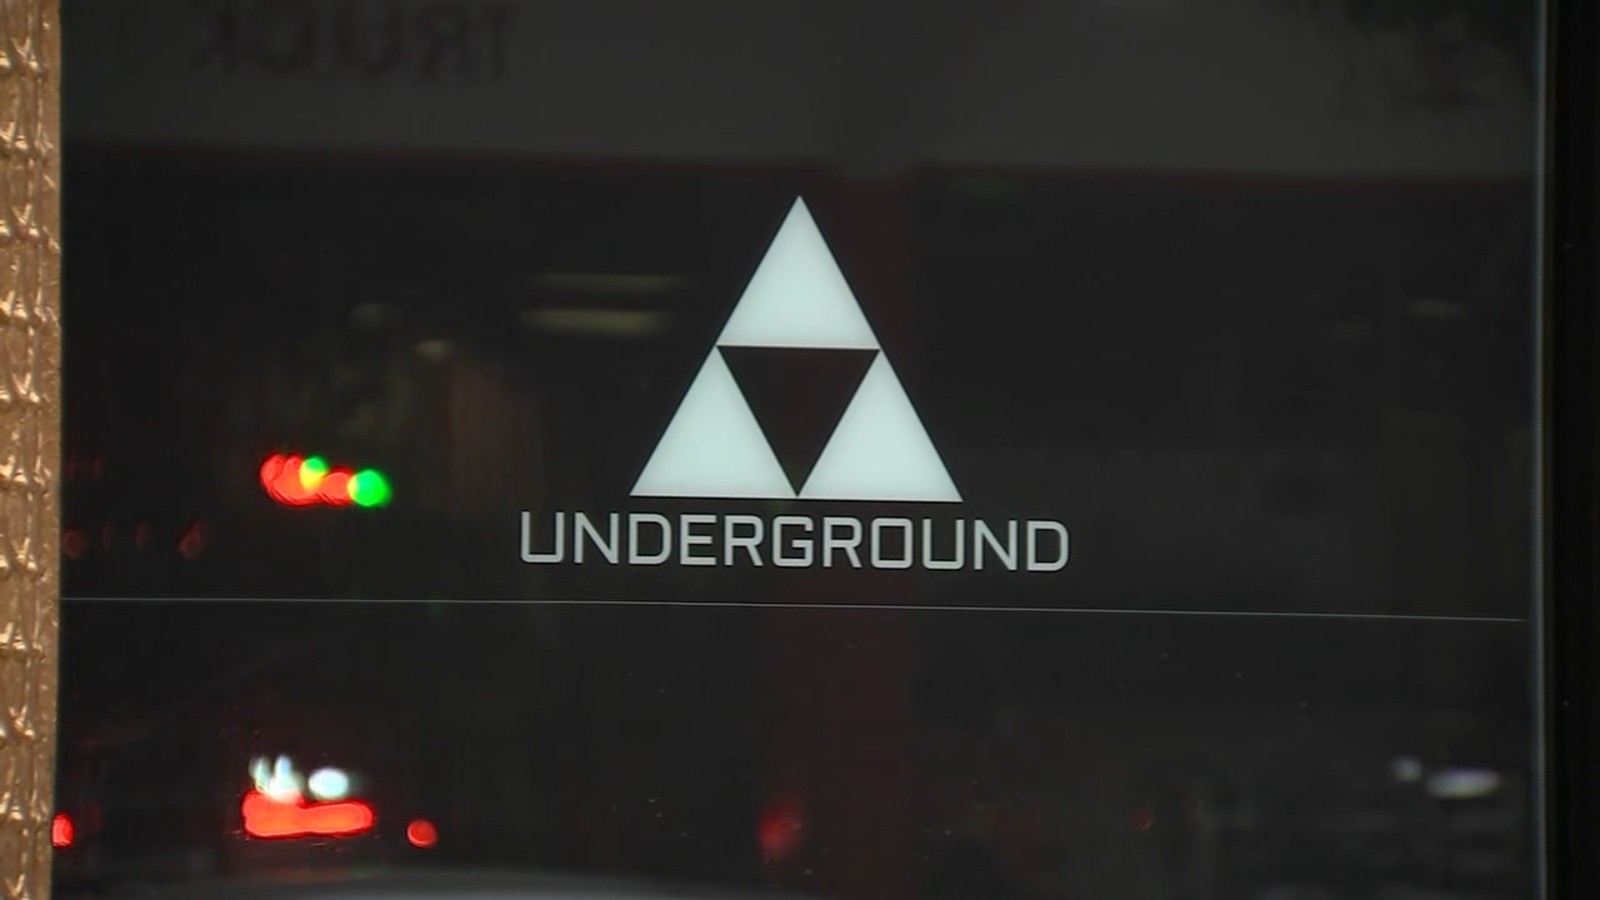 The Underground Chicago, popular River North nightclub, ending regular operations